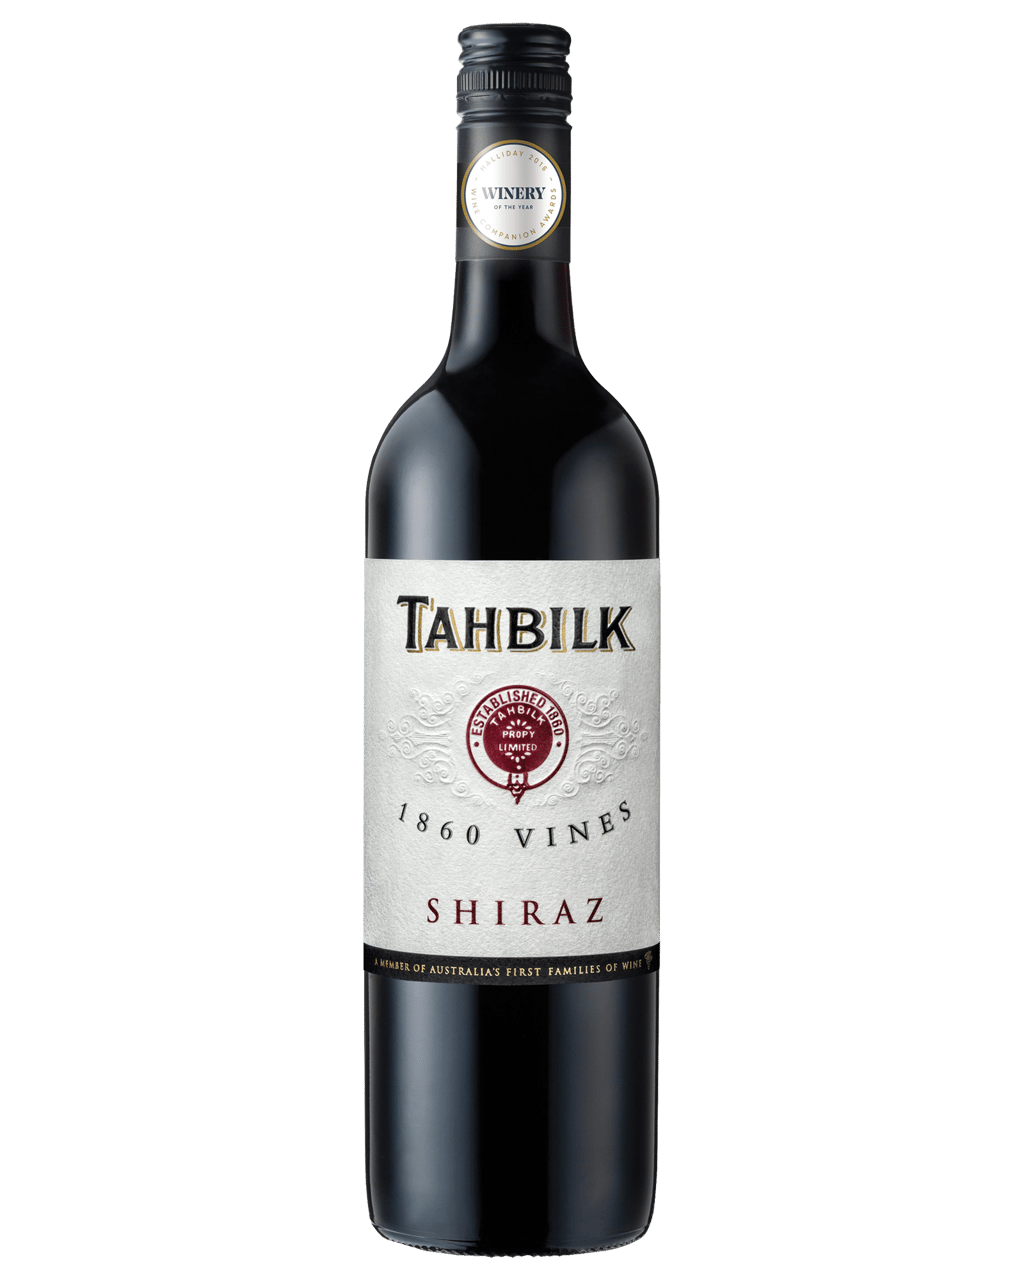 2016 Tahbilk 1860 Vines Shiraz 750ml